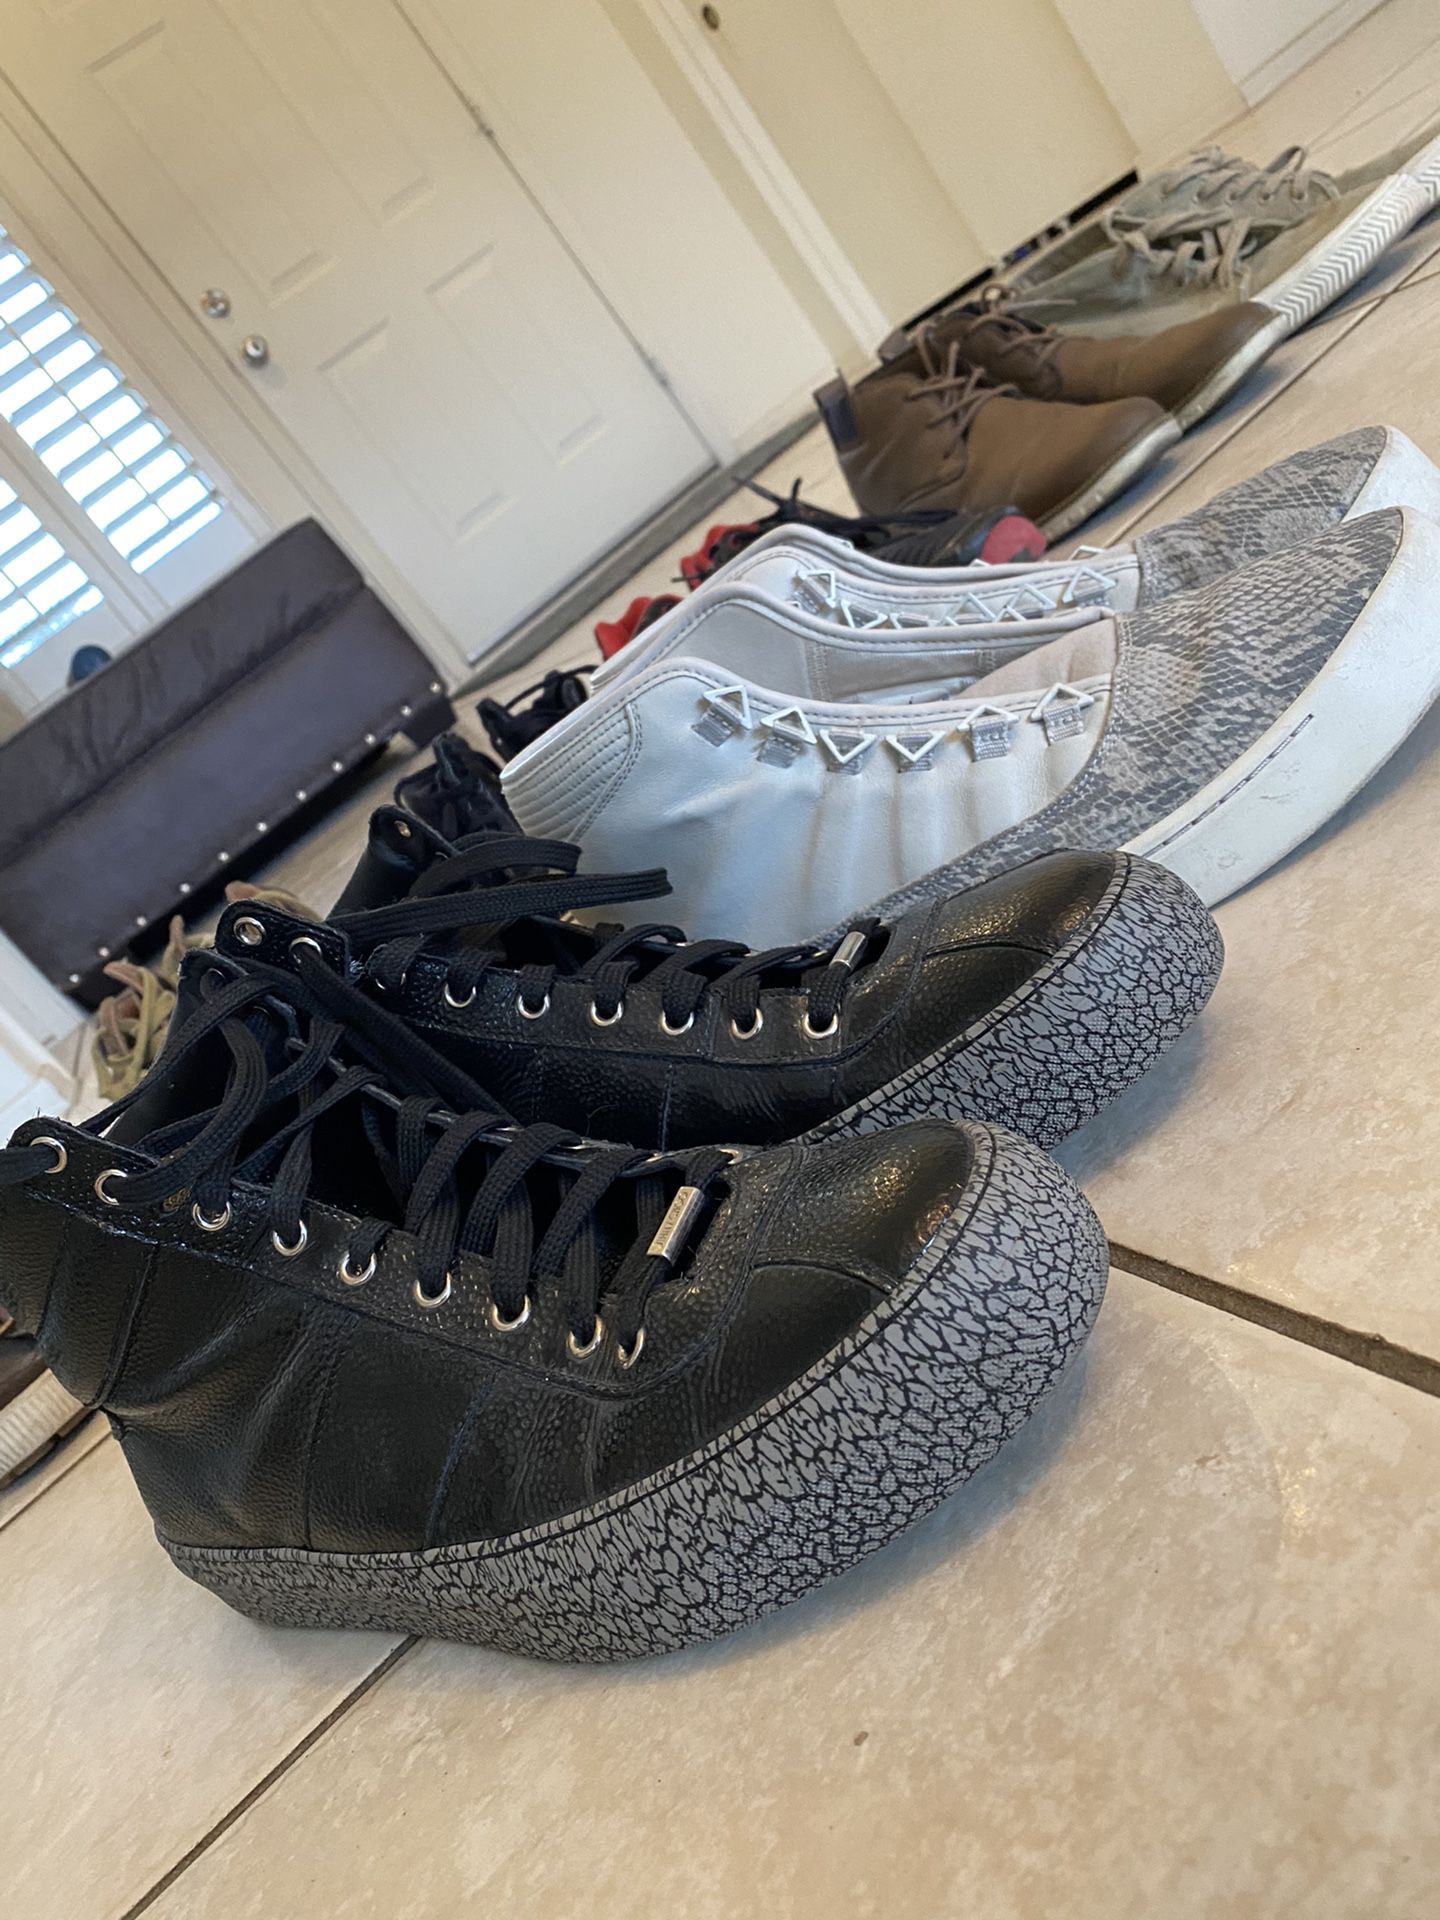 Men’s Shoes Size 11 11.5 12 9 (Pairs $60) Jordan Jimmy Choo, Jordan, Vans, Polo, Etc